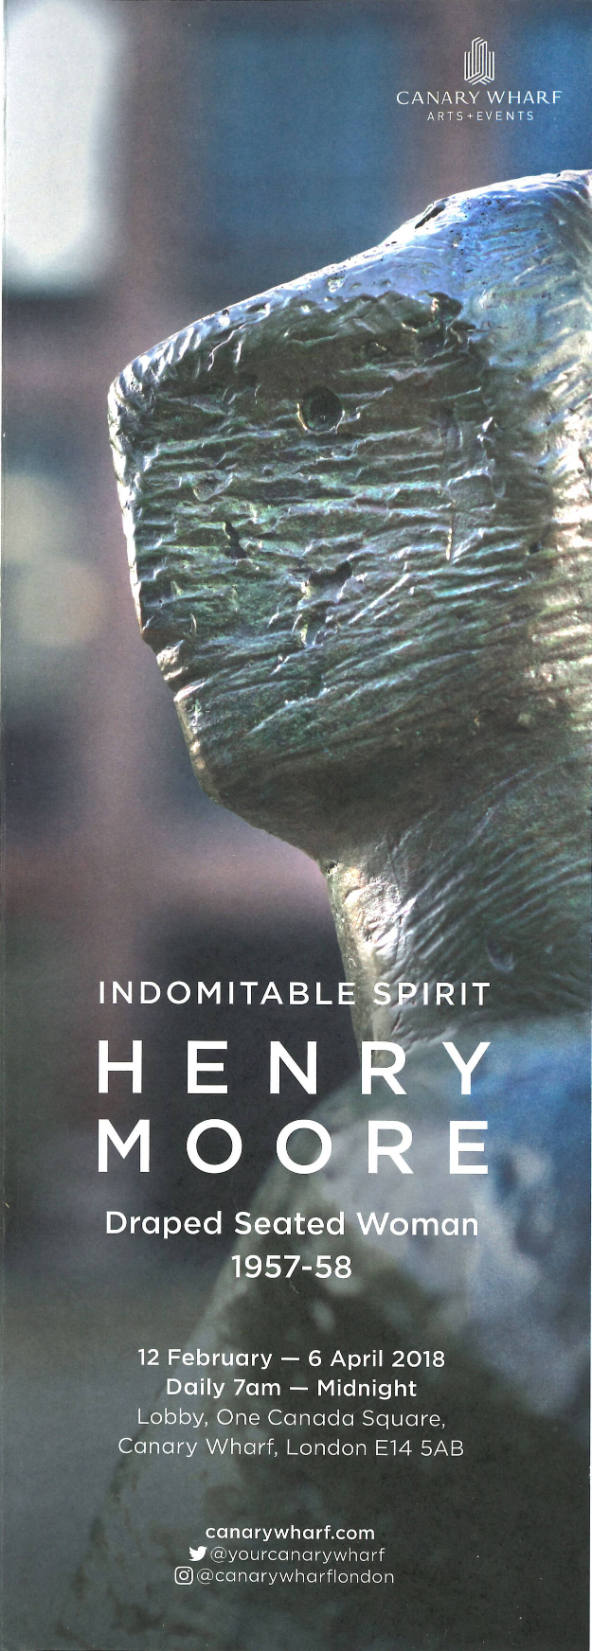 Indomitable Spirit: Henry Moore, Draped Seated Woman 1957-58